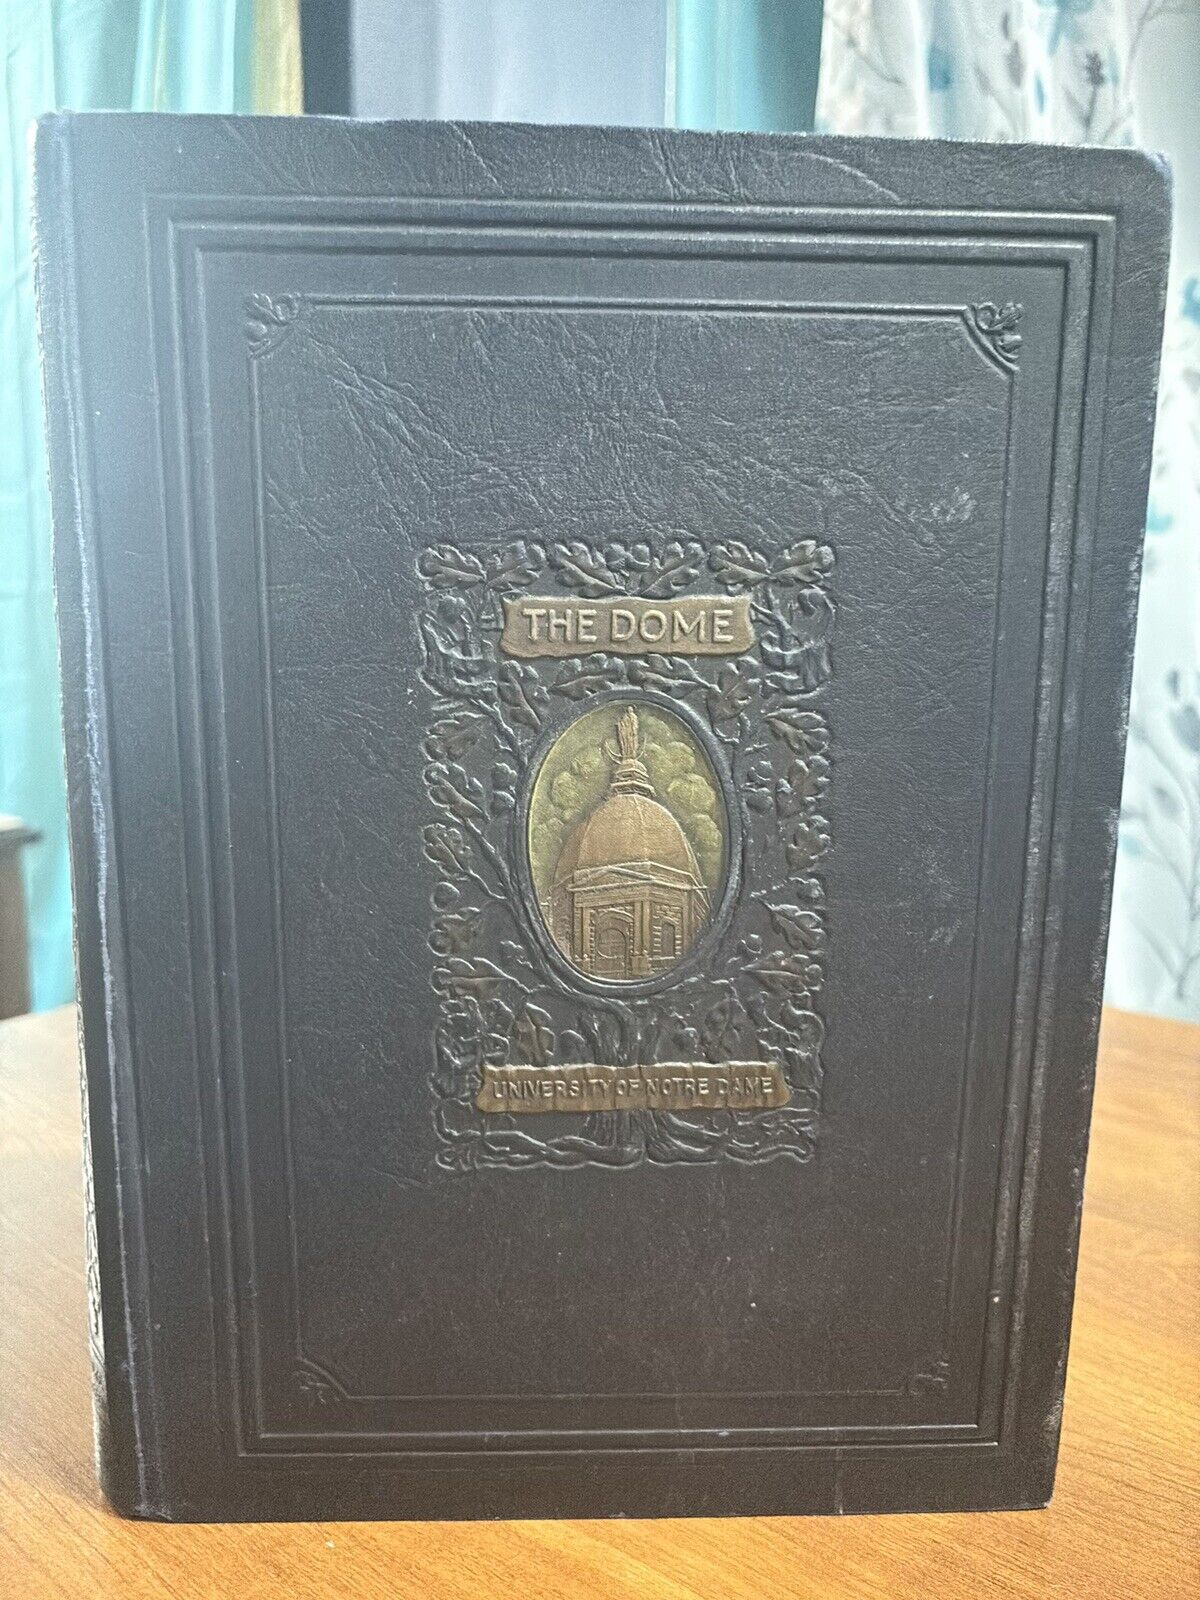 RARE ANTIQUE 1923 NOTRE DAME YEARBOOK - COACH ROCKNE Beautiful Book